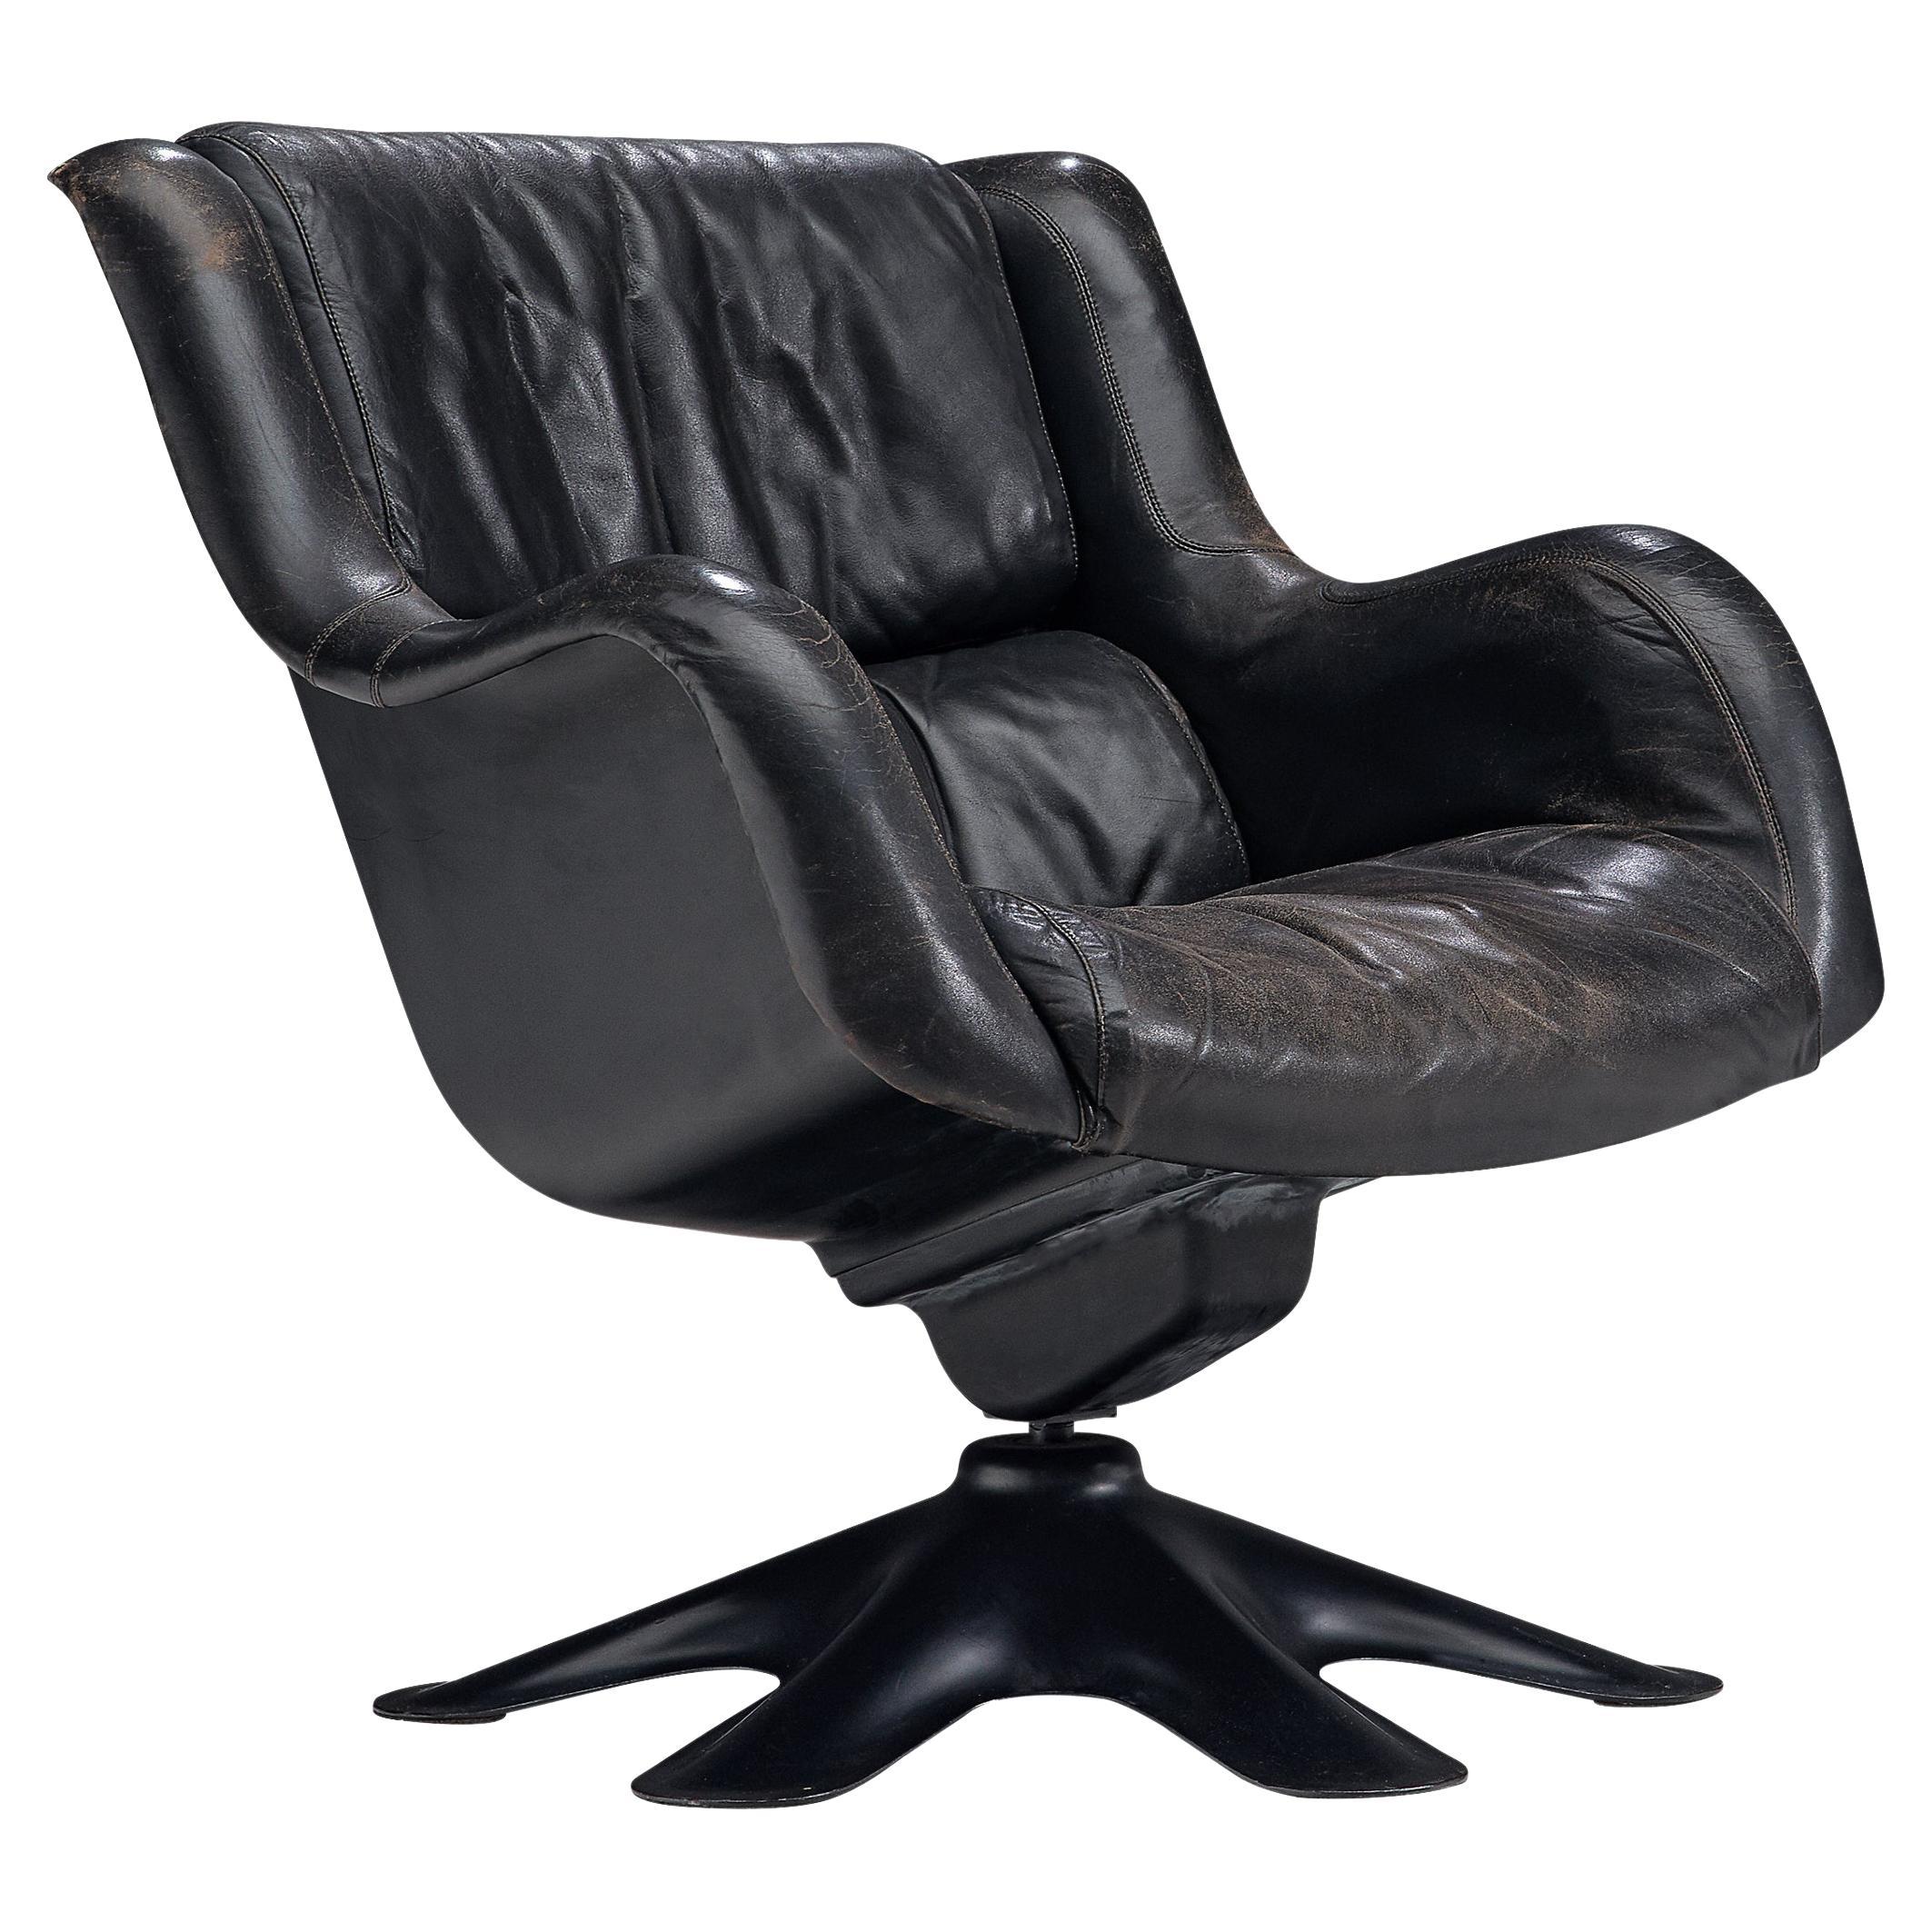 Yrjo Kukkapuro 'Karuselli' Lounge Chair in Black Patinated Leather